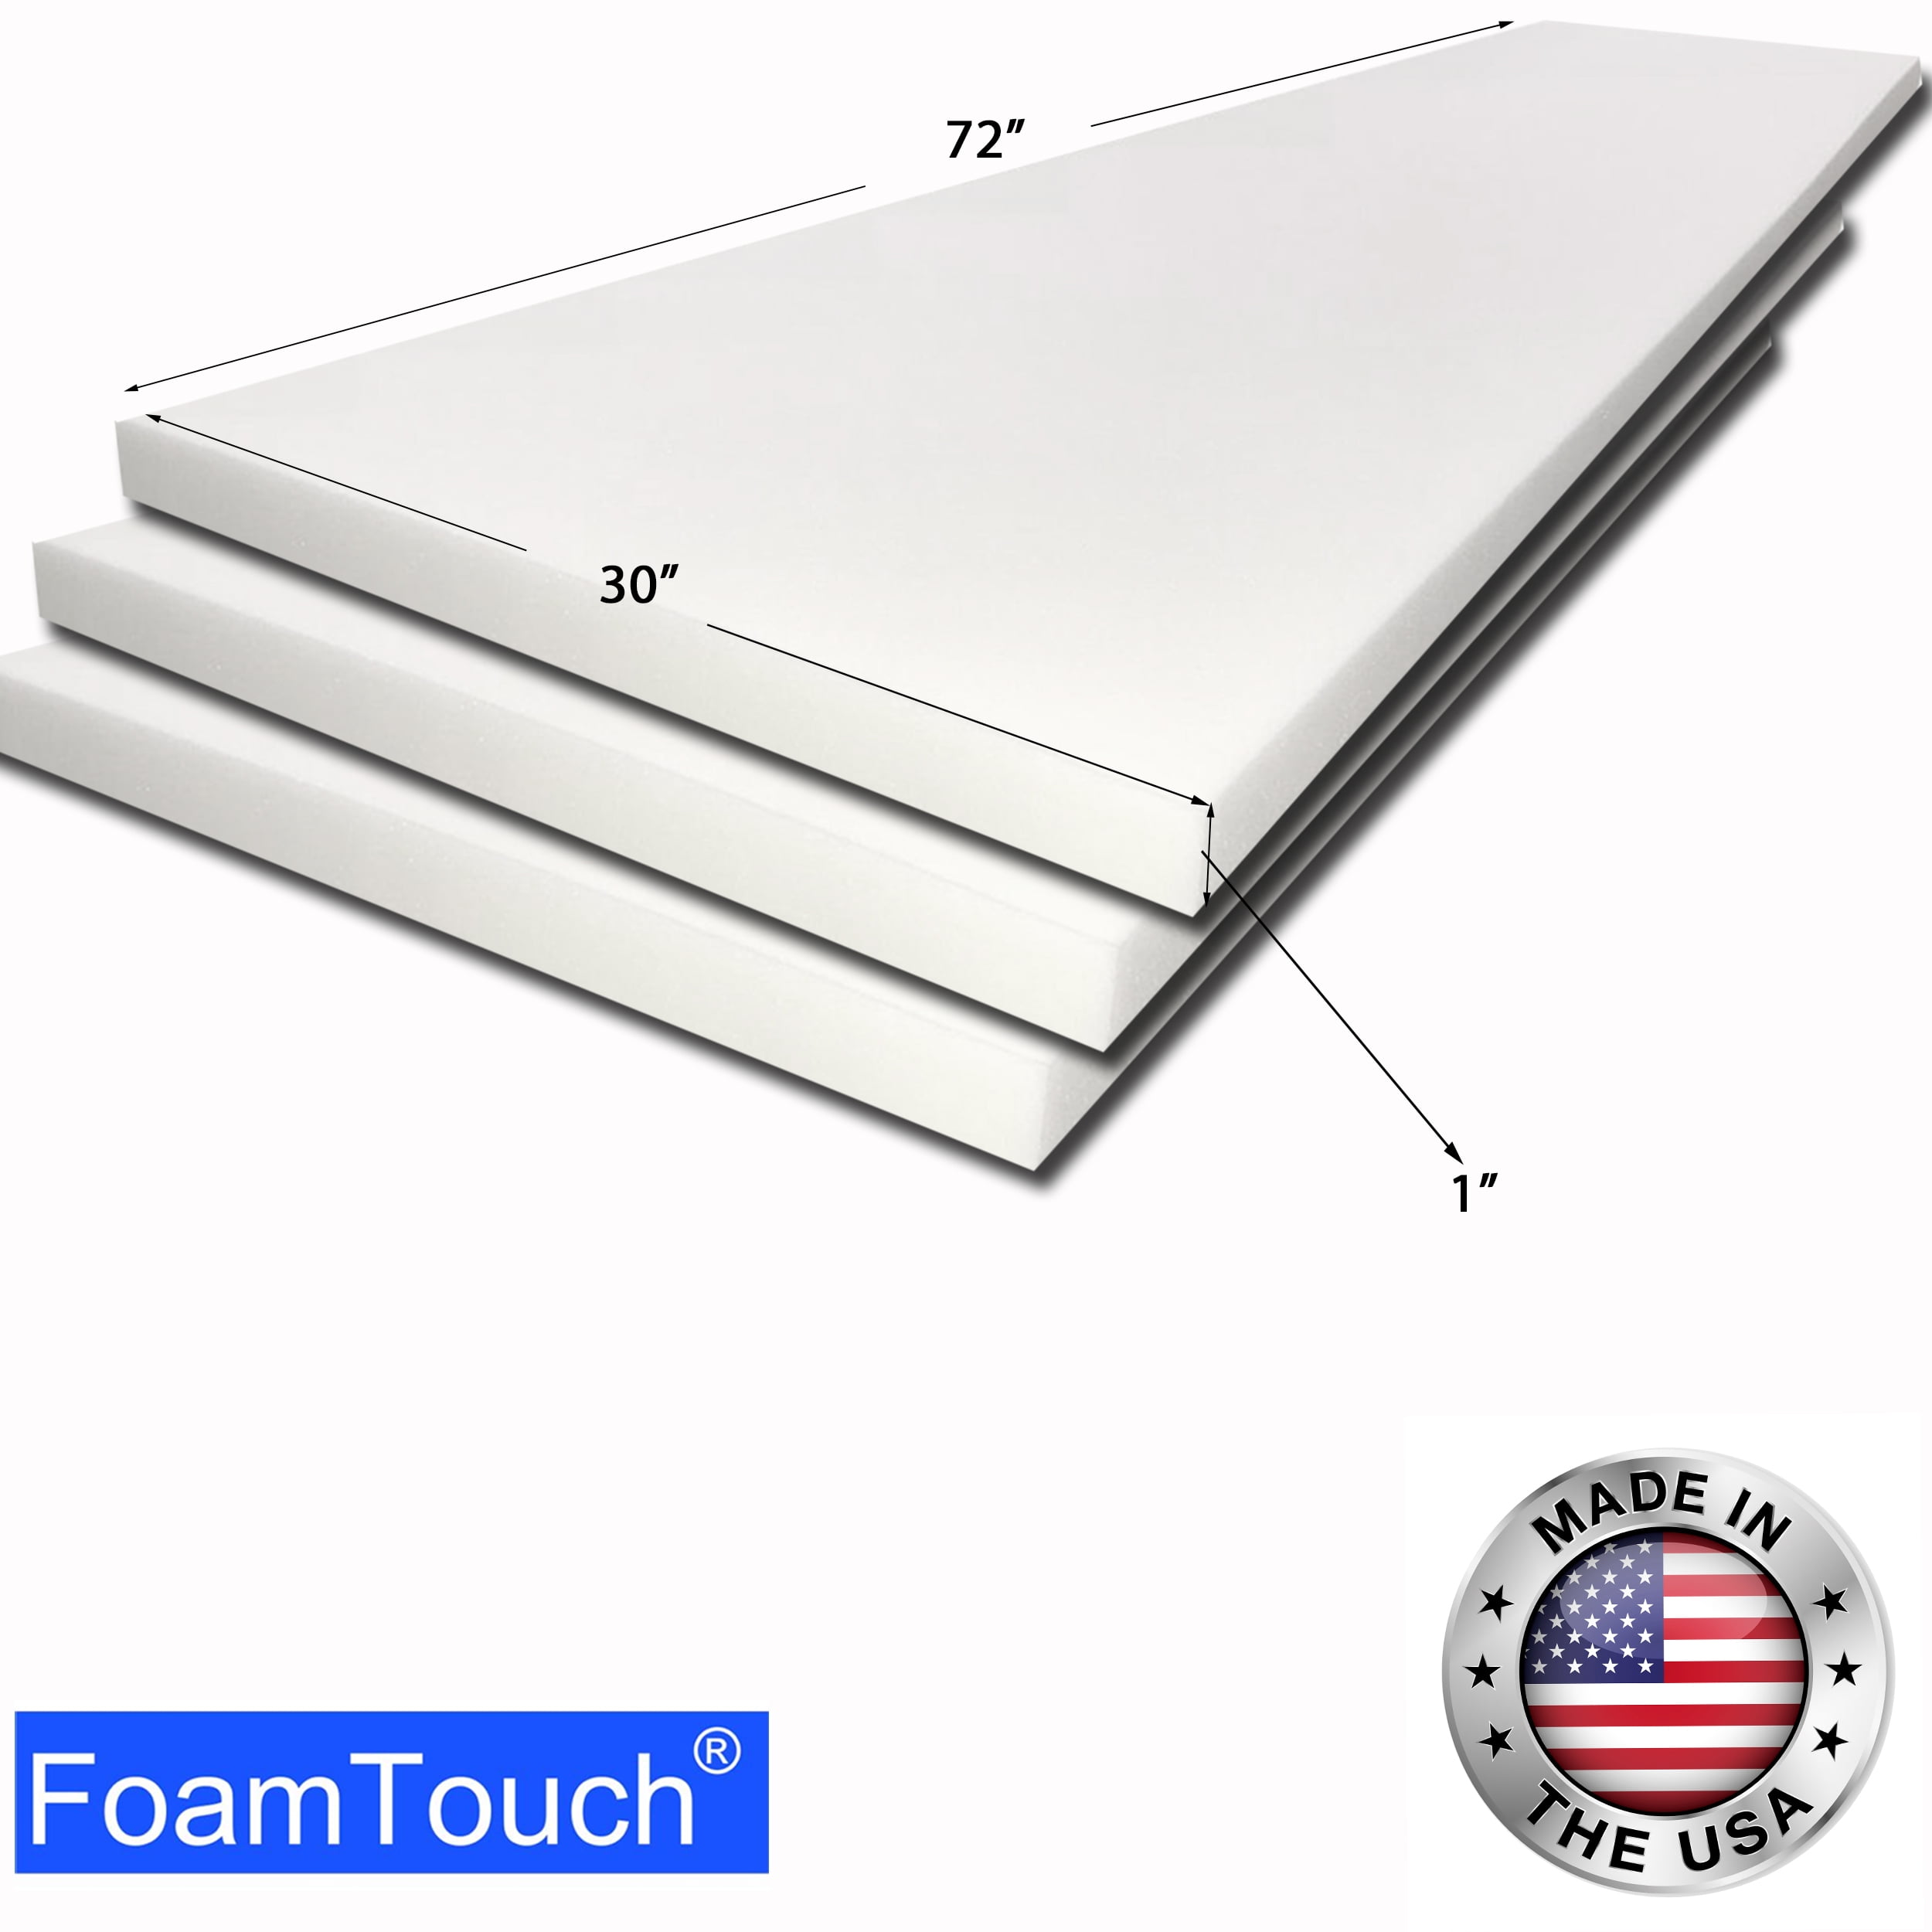 Foamtouch® Upholstery Foam Cushion High Density 1 Height x 24 Width x 72  Length